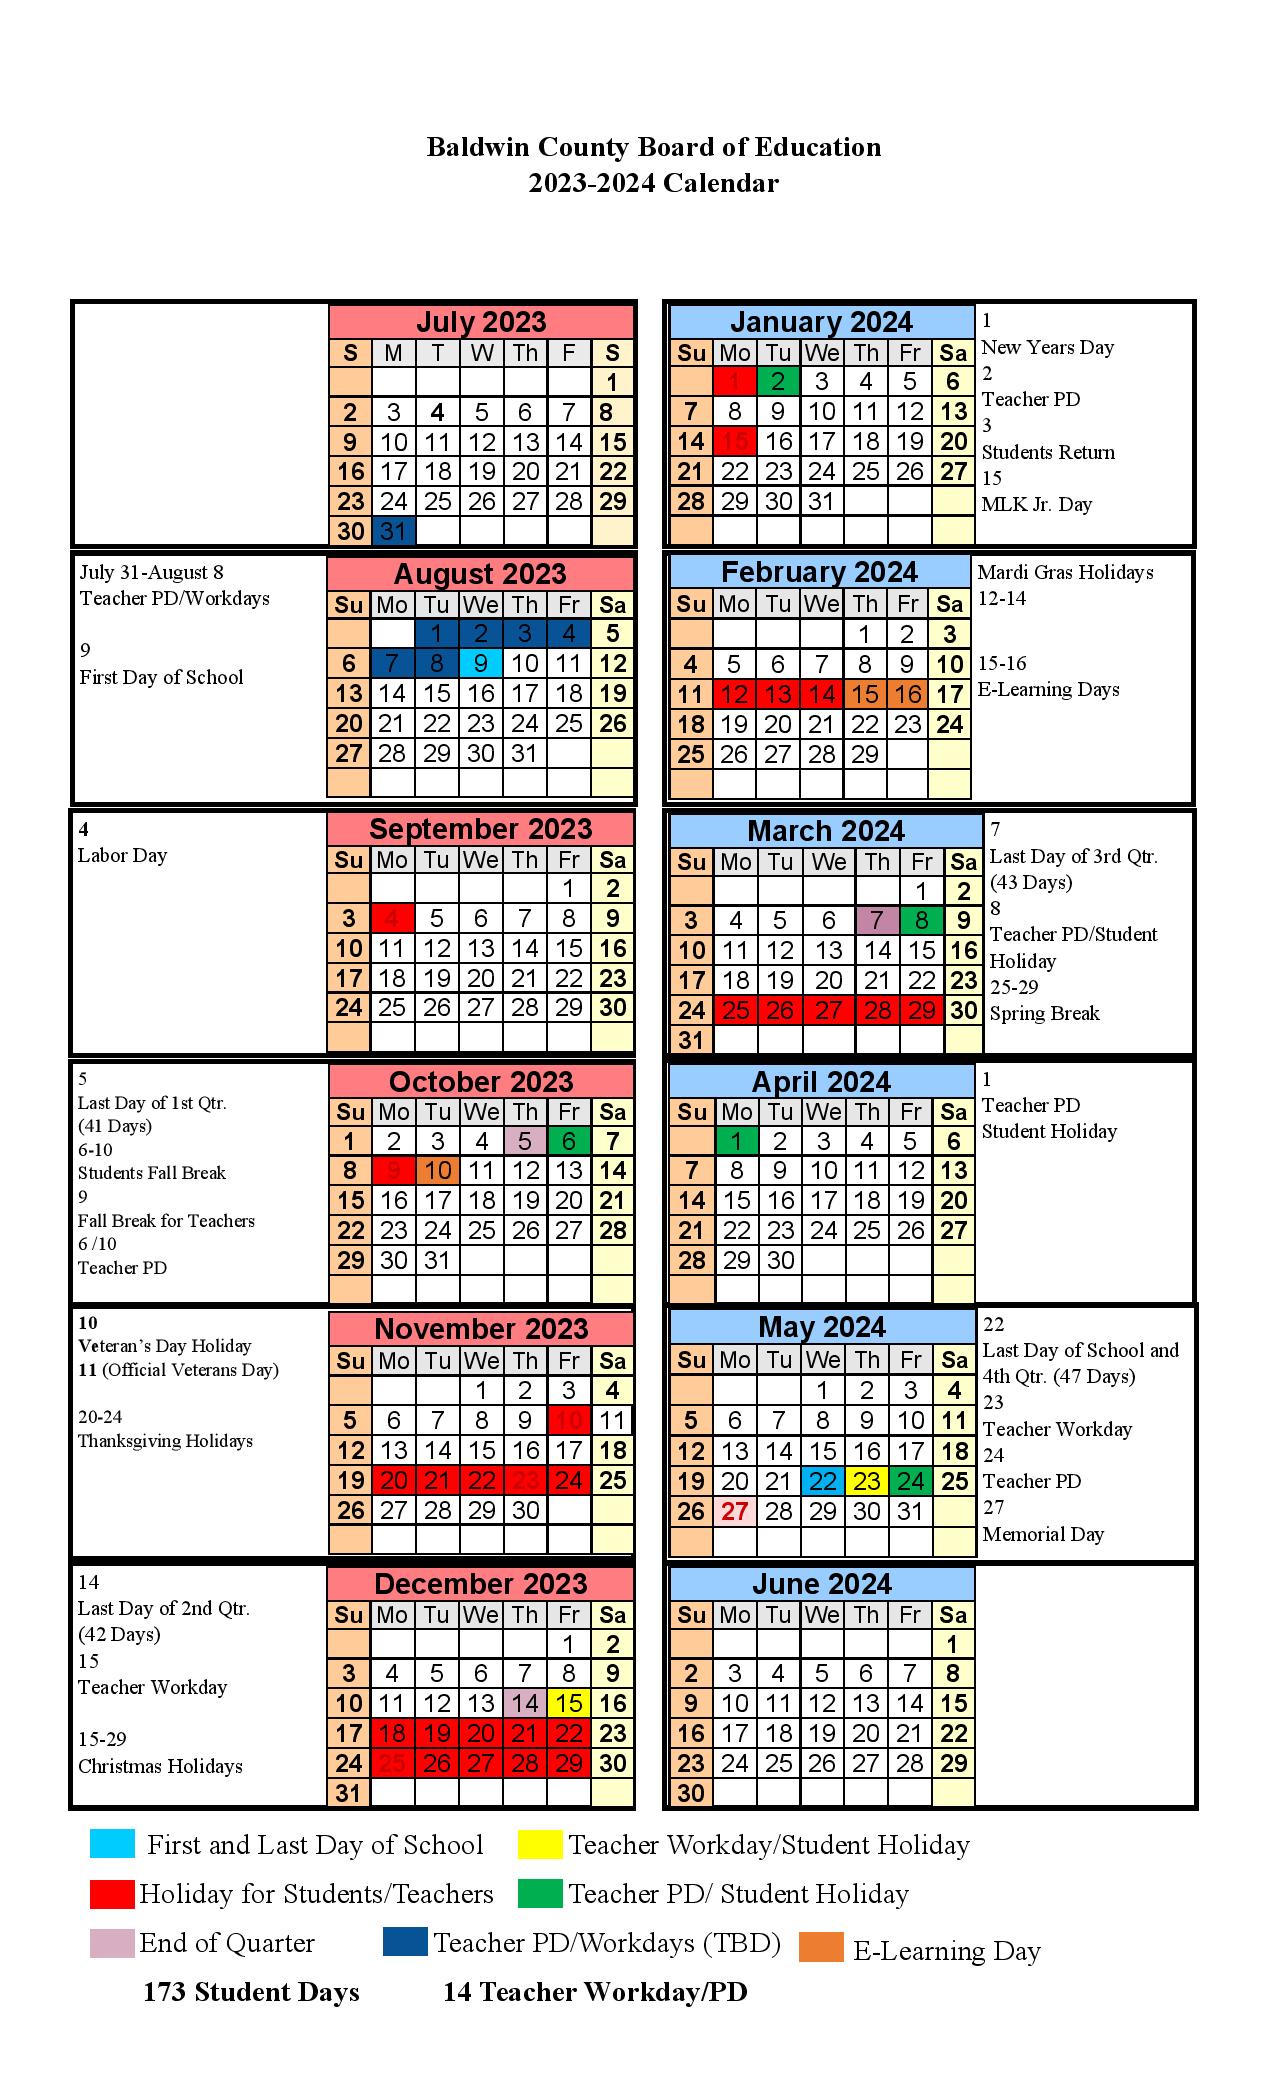 baldwin-county-public-schools-calendar-2023-2024-in-pdf